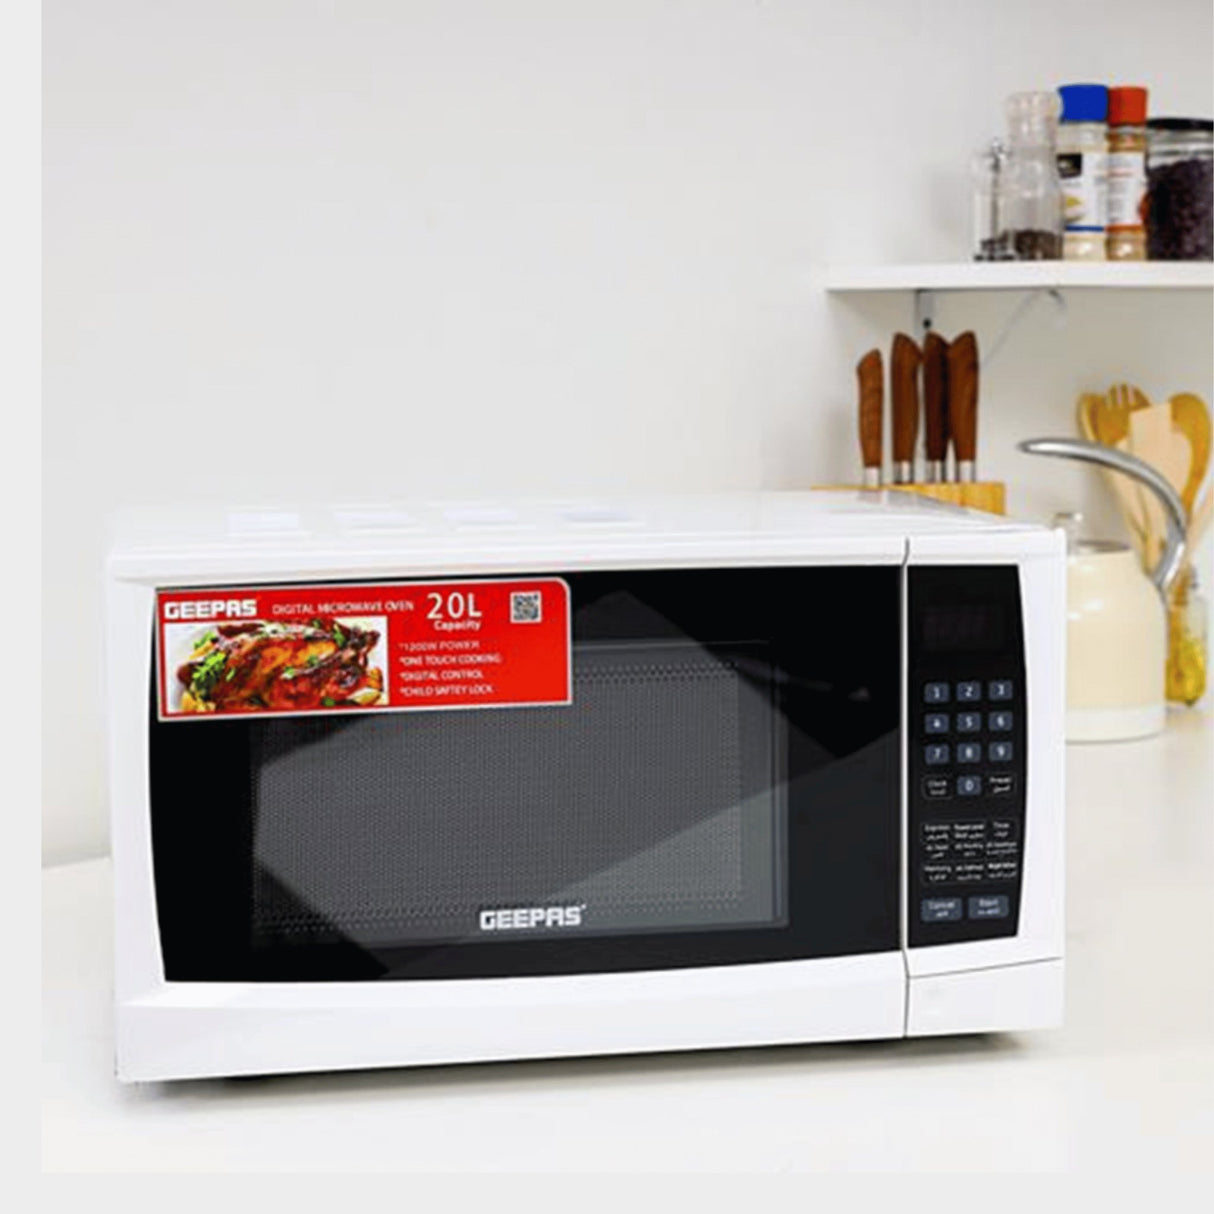 Geepas 20L 1200W Digital Microwave Oven - GMO1895  - KWT Tech Mart